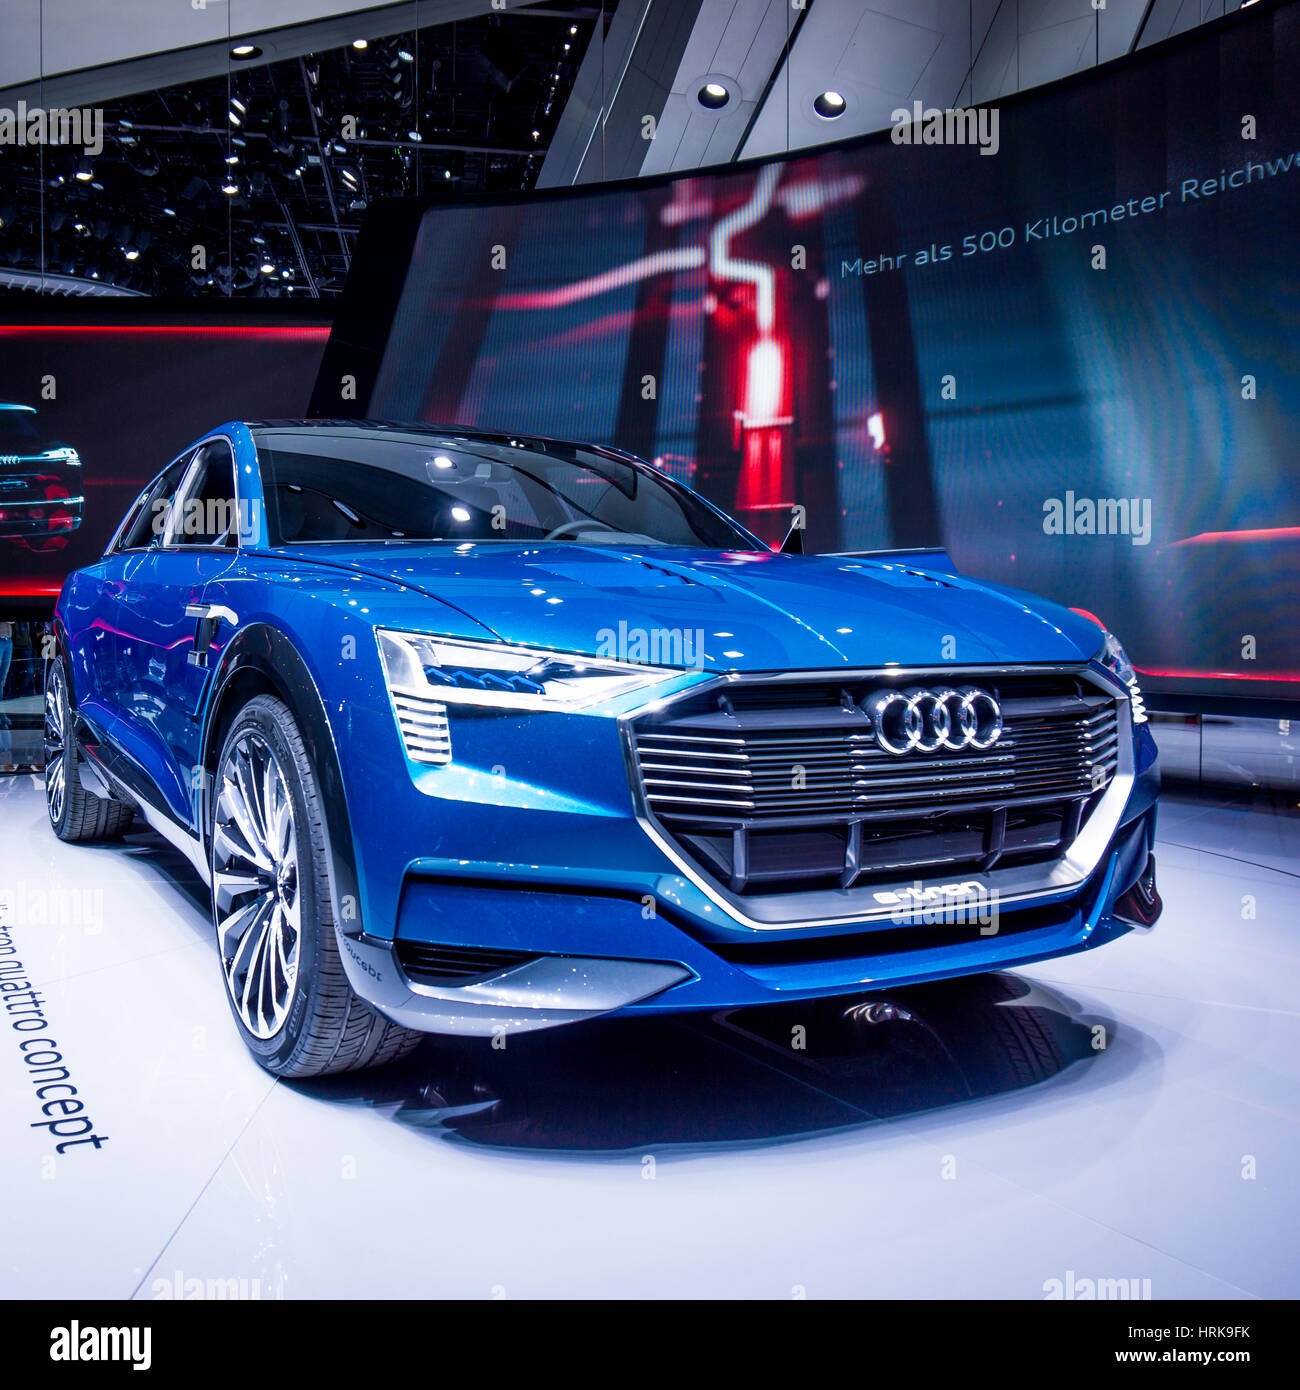 Frankfurt, Germany - September 22, 2015: Audi e-tron  concept car presented on display in Frankfurt. Germany Stock Photo